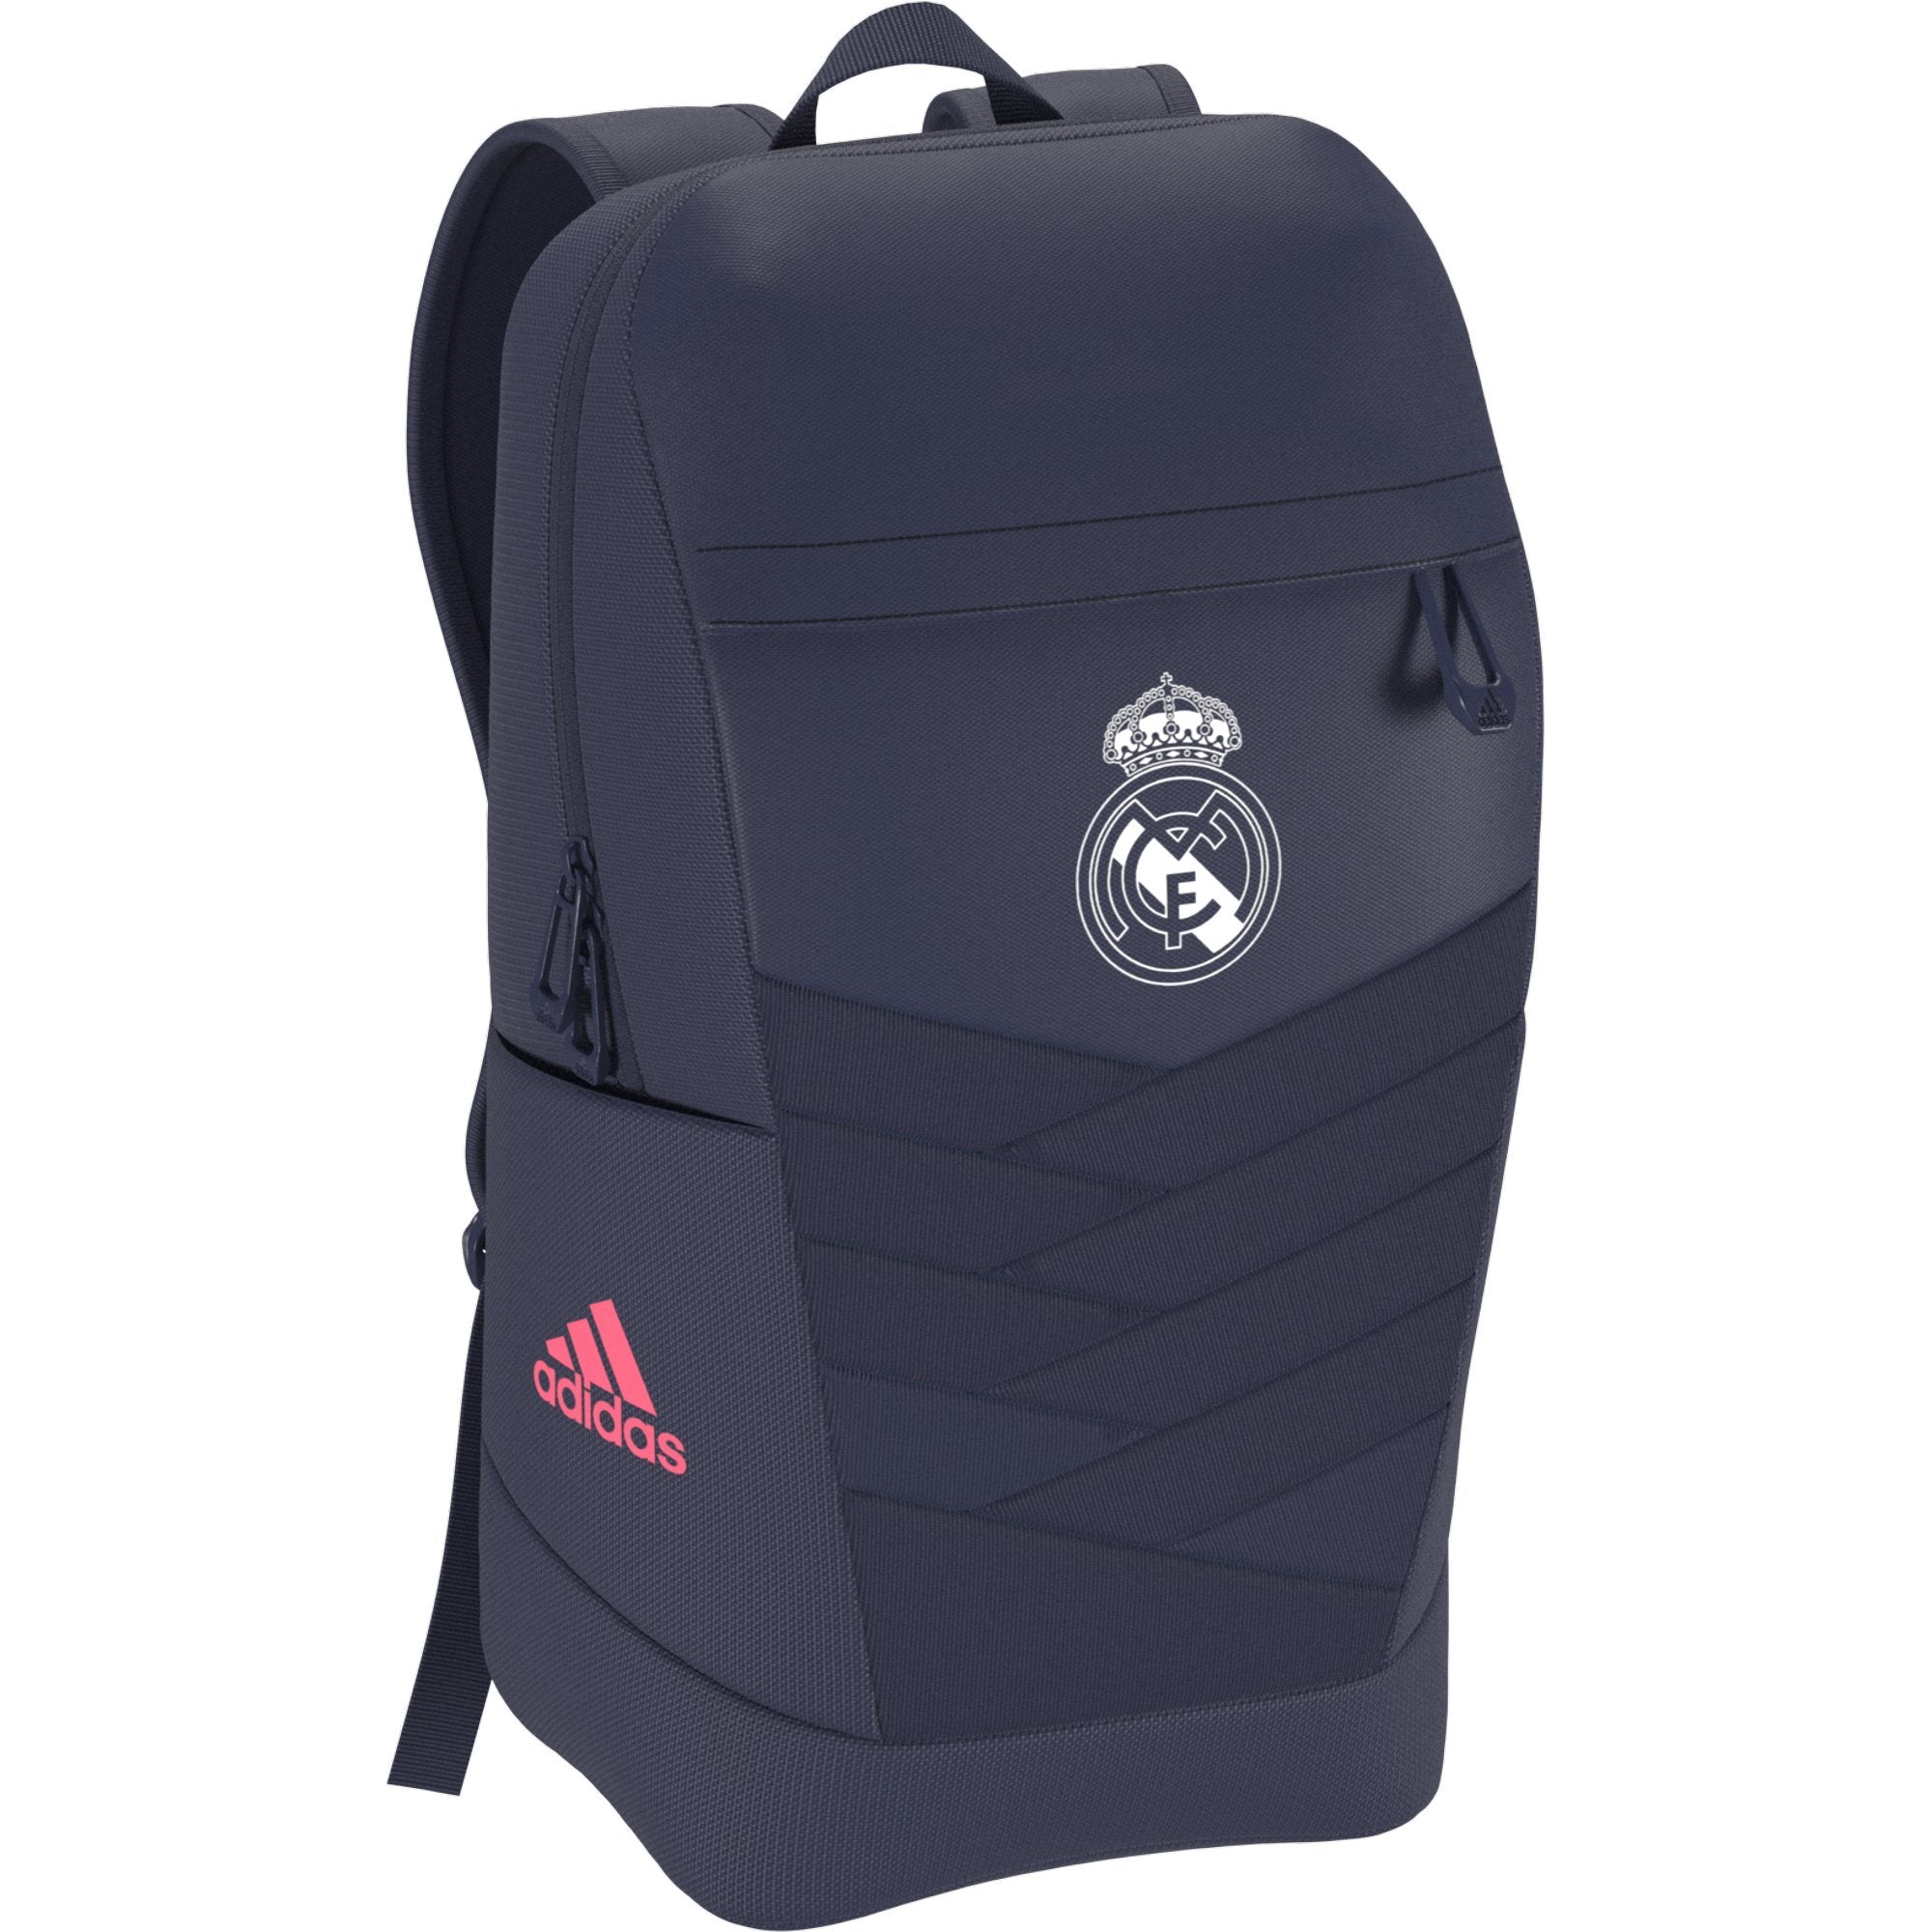 Backpack ID Real Madrid Adidas - Real 